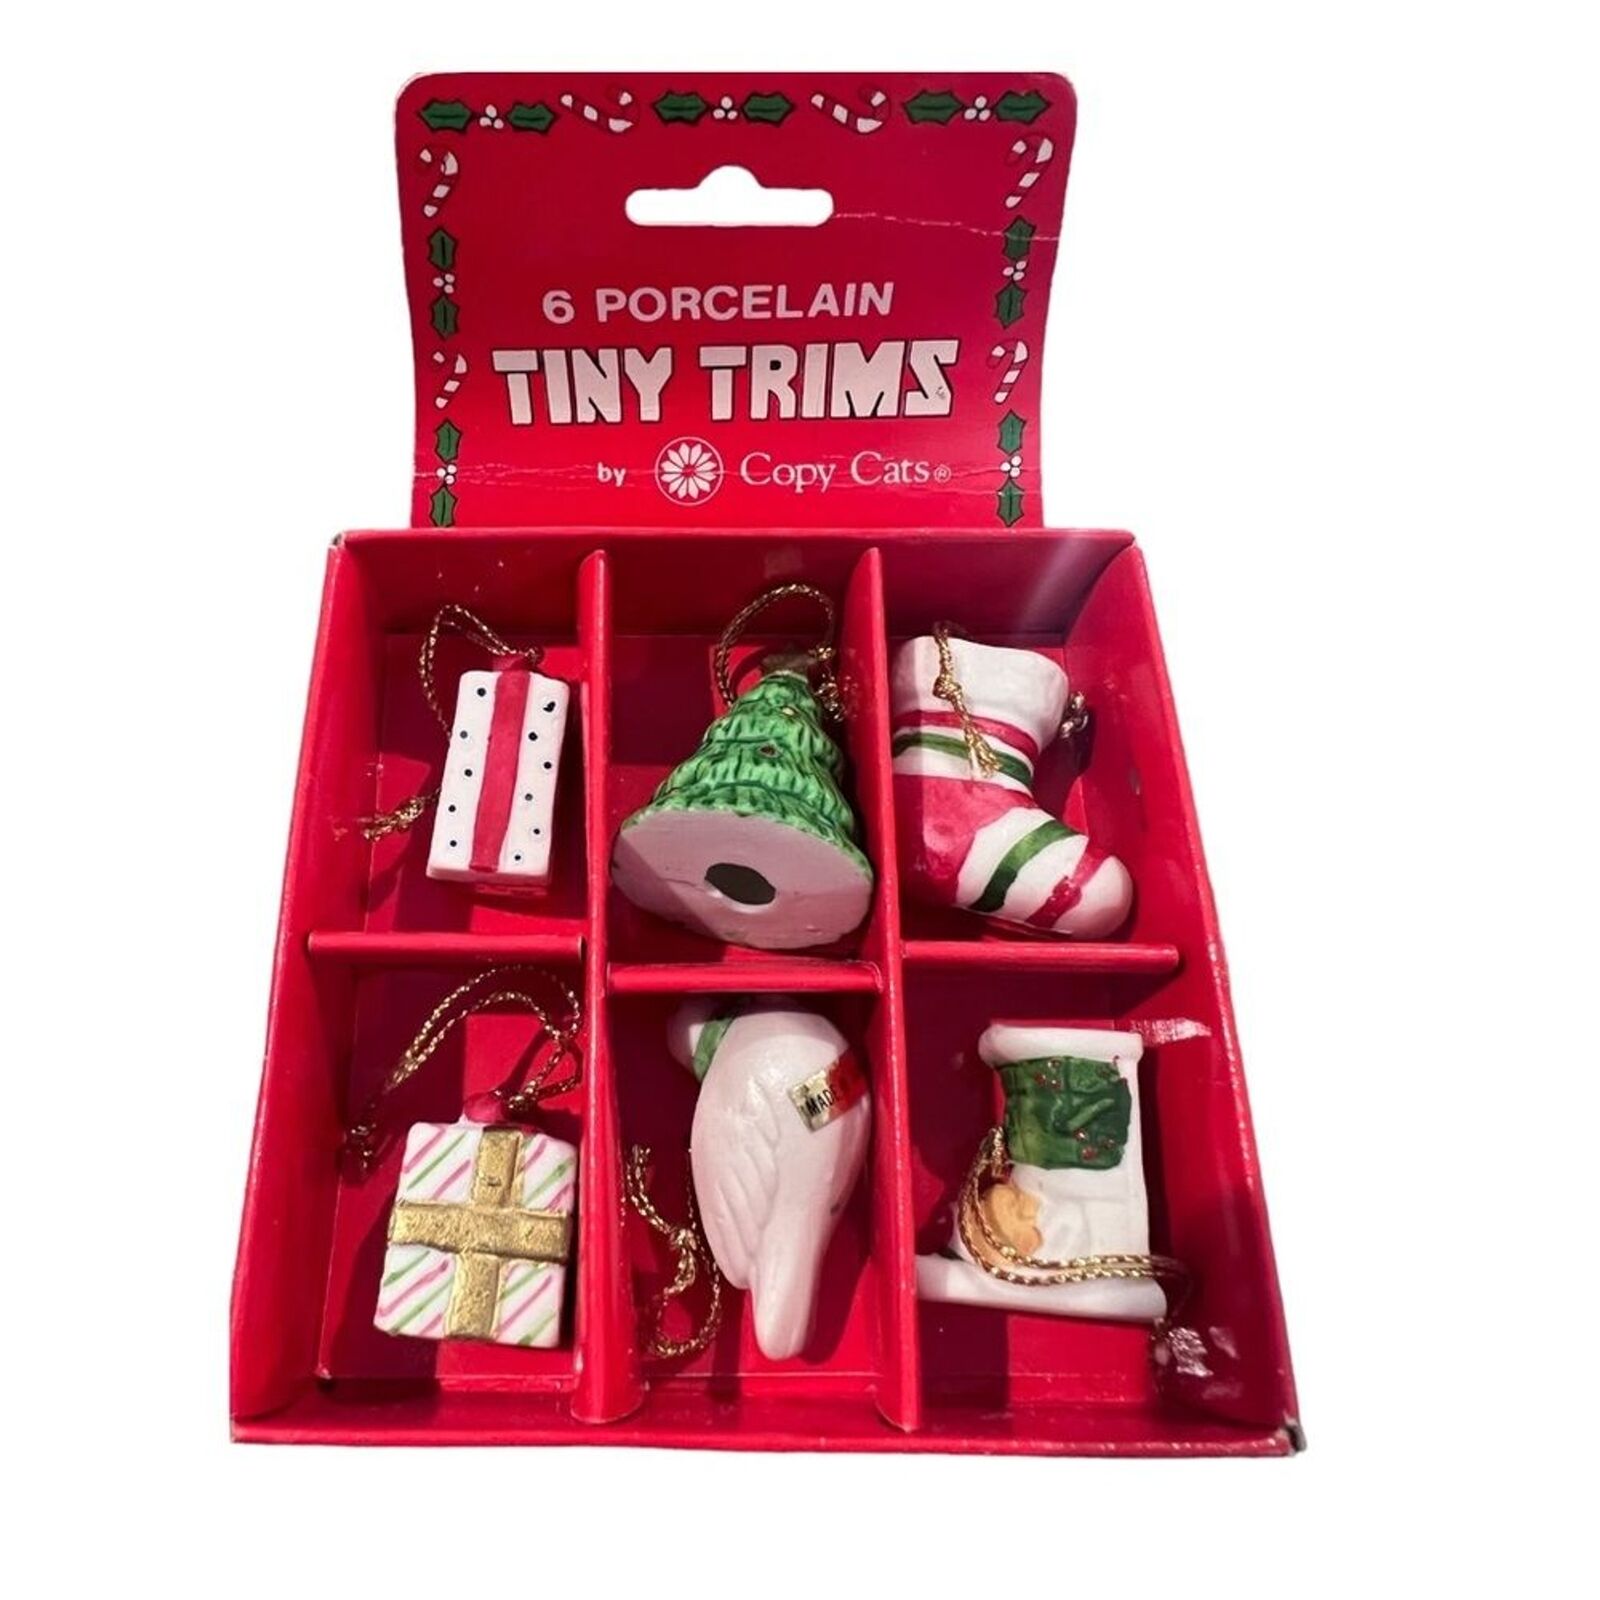 Tiny Christmas Ornaments - Porcelain Tree Trims Stockings, Gifts, Dove & Tree